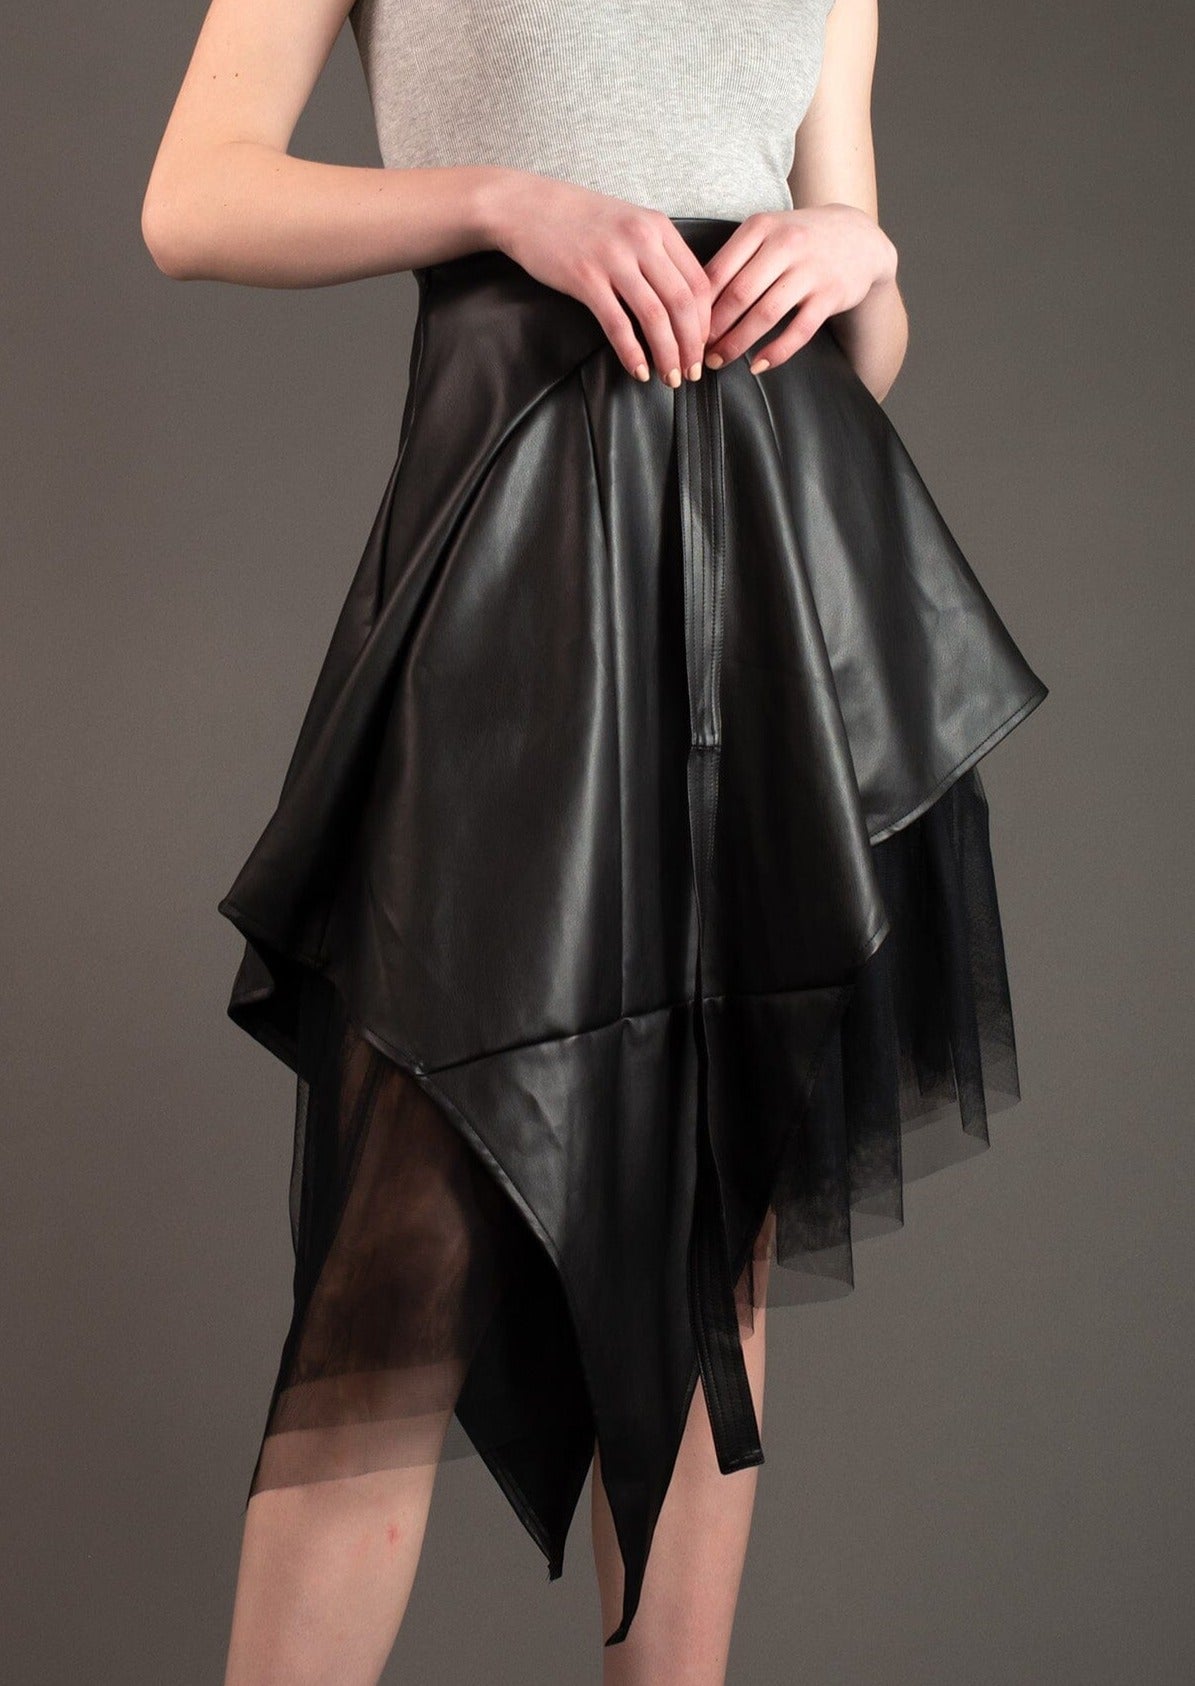 Vegan Leather + Tulle Skirt - Kate Hewko